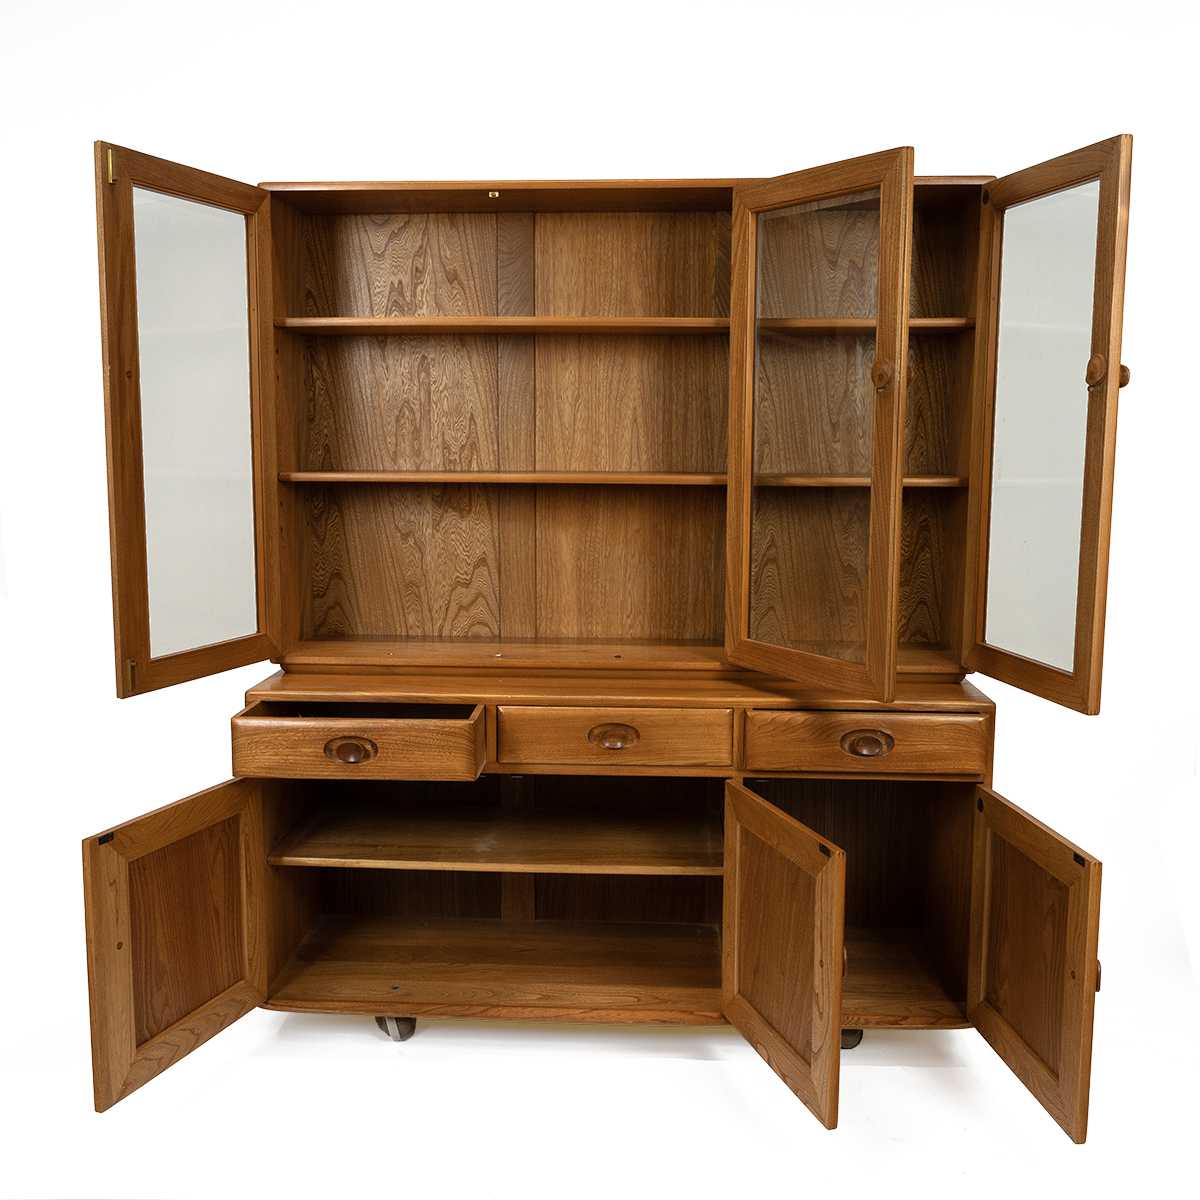 Ercol light elm Windsor design bookcase sideboard. Three glazed doors opening to reveal adjustabl... - Image 2 of 5